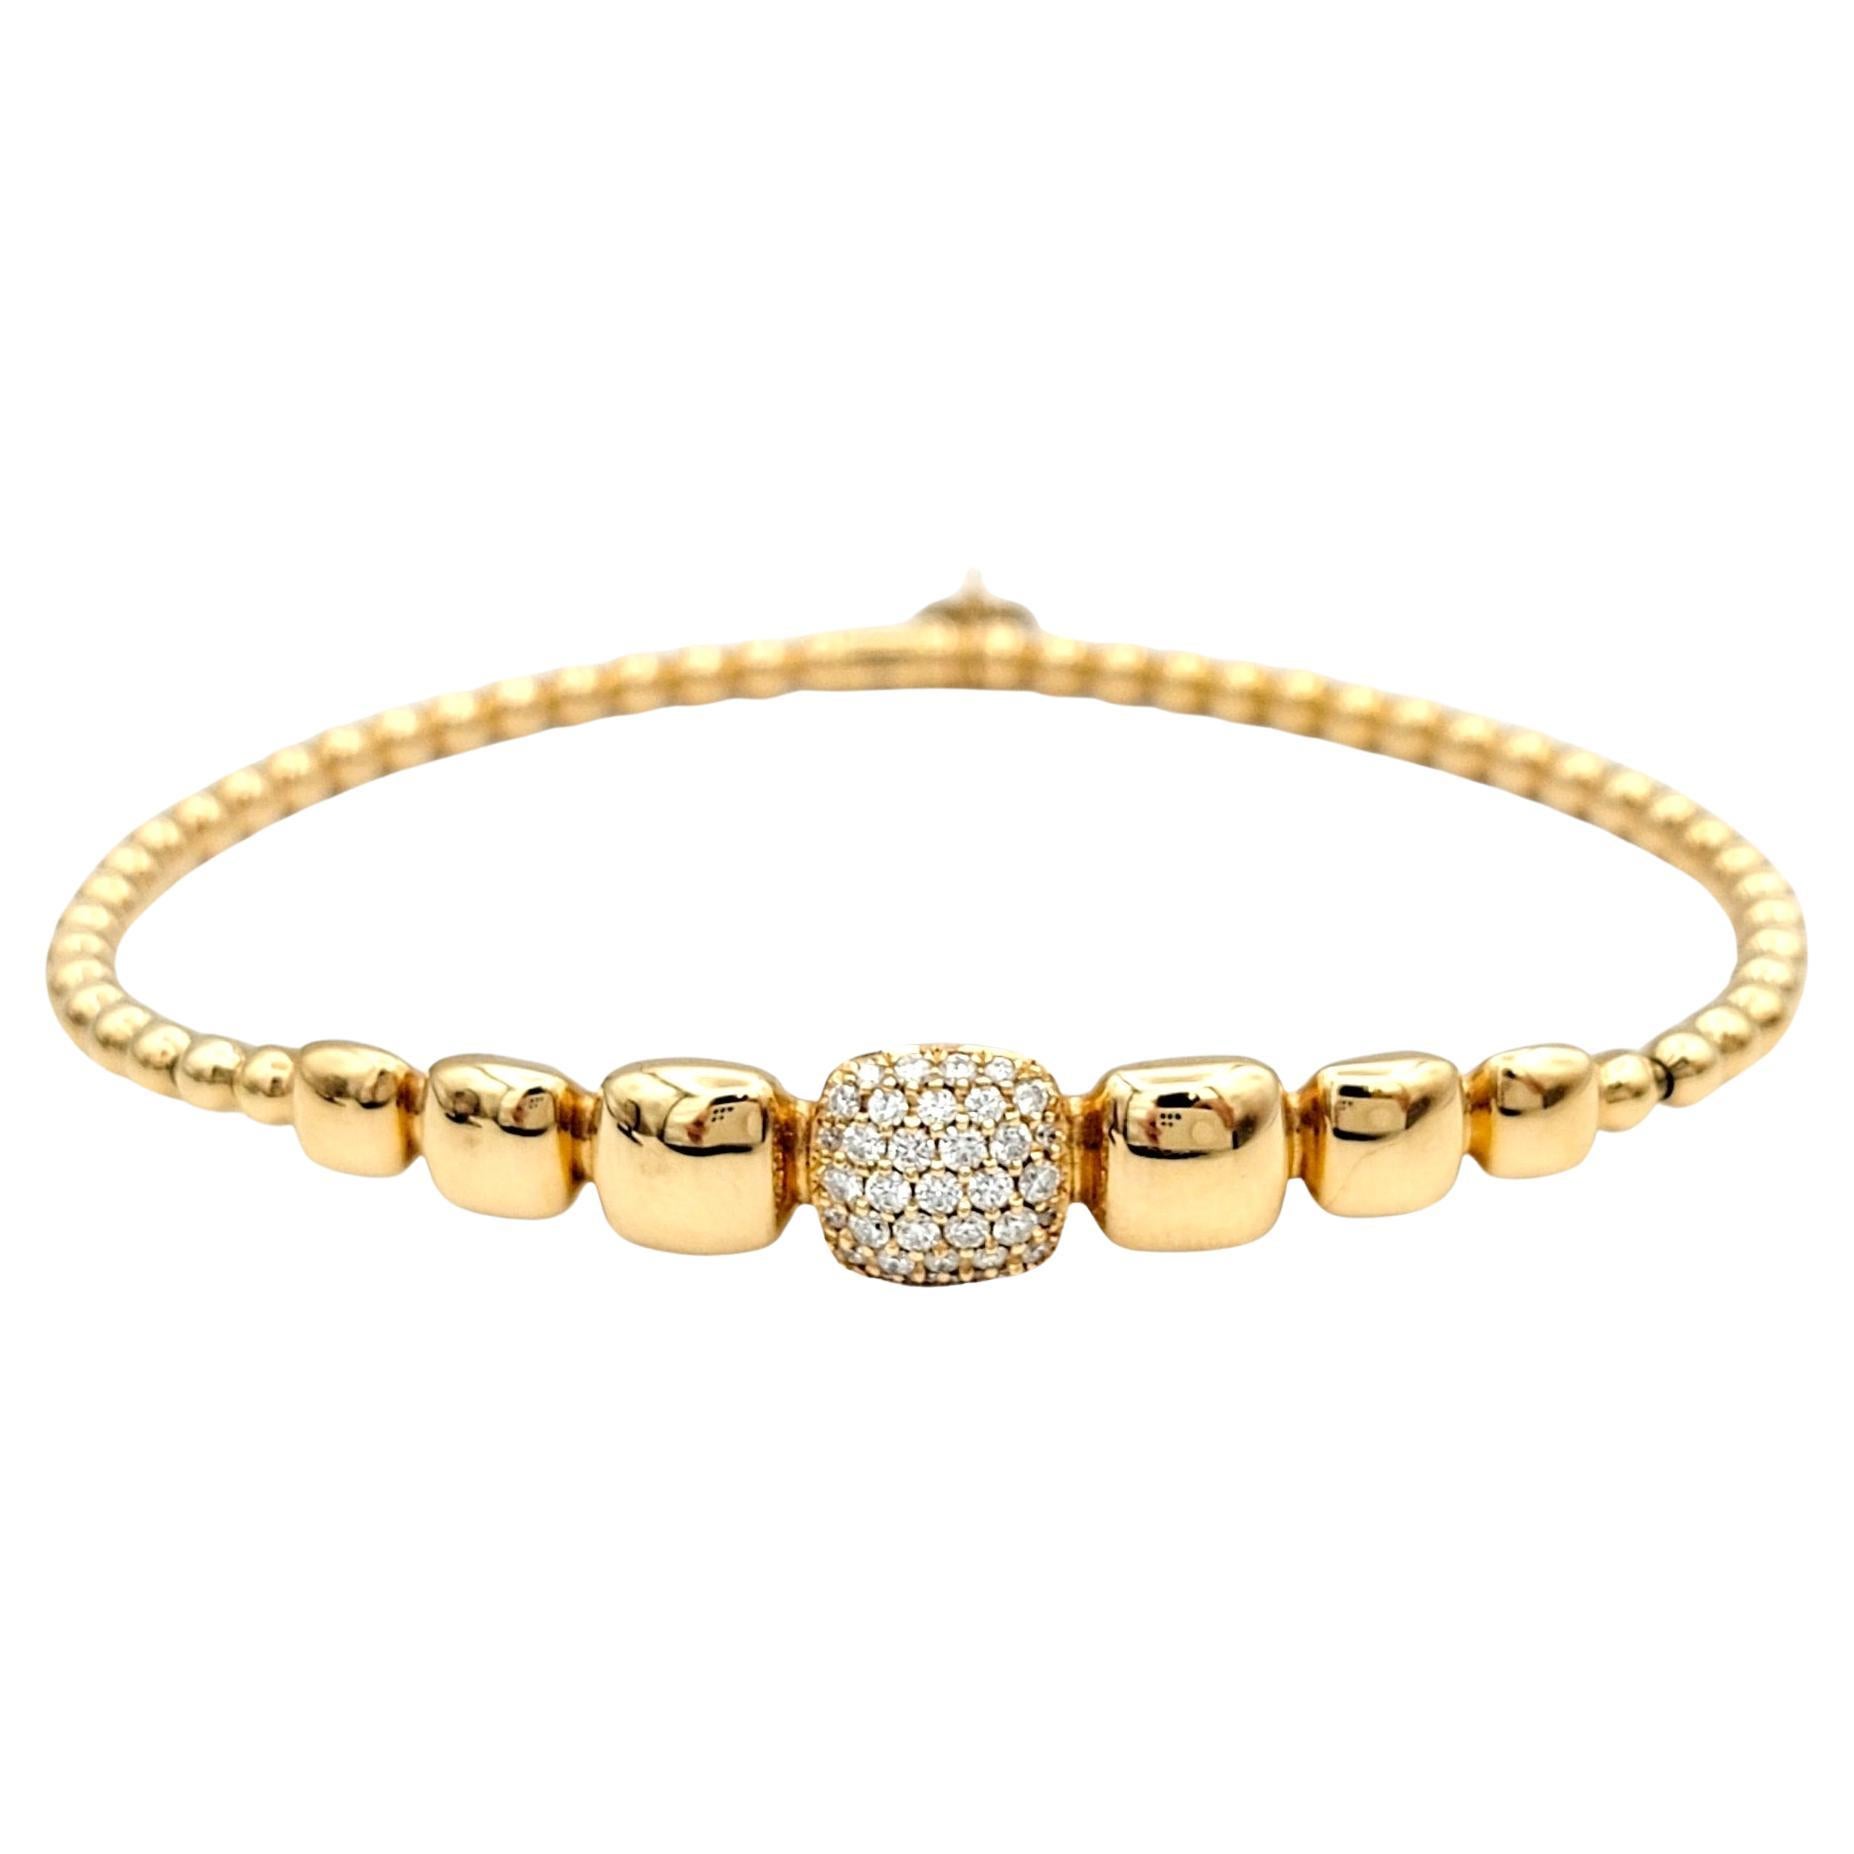 Hulchi Belluni Tresore Collection 3mm Stretch Bracelet Rose Gold with Diamonds 